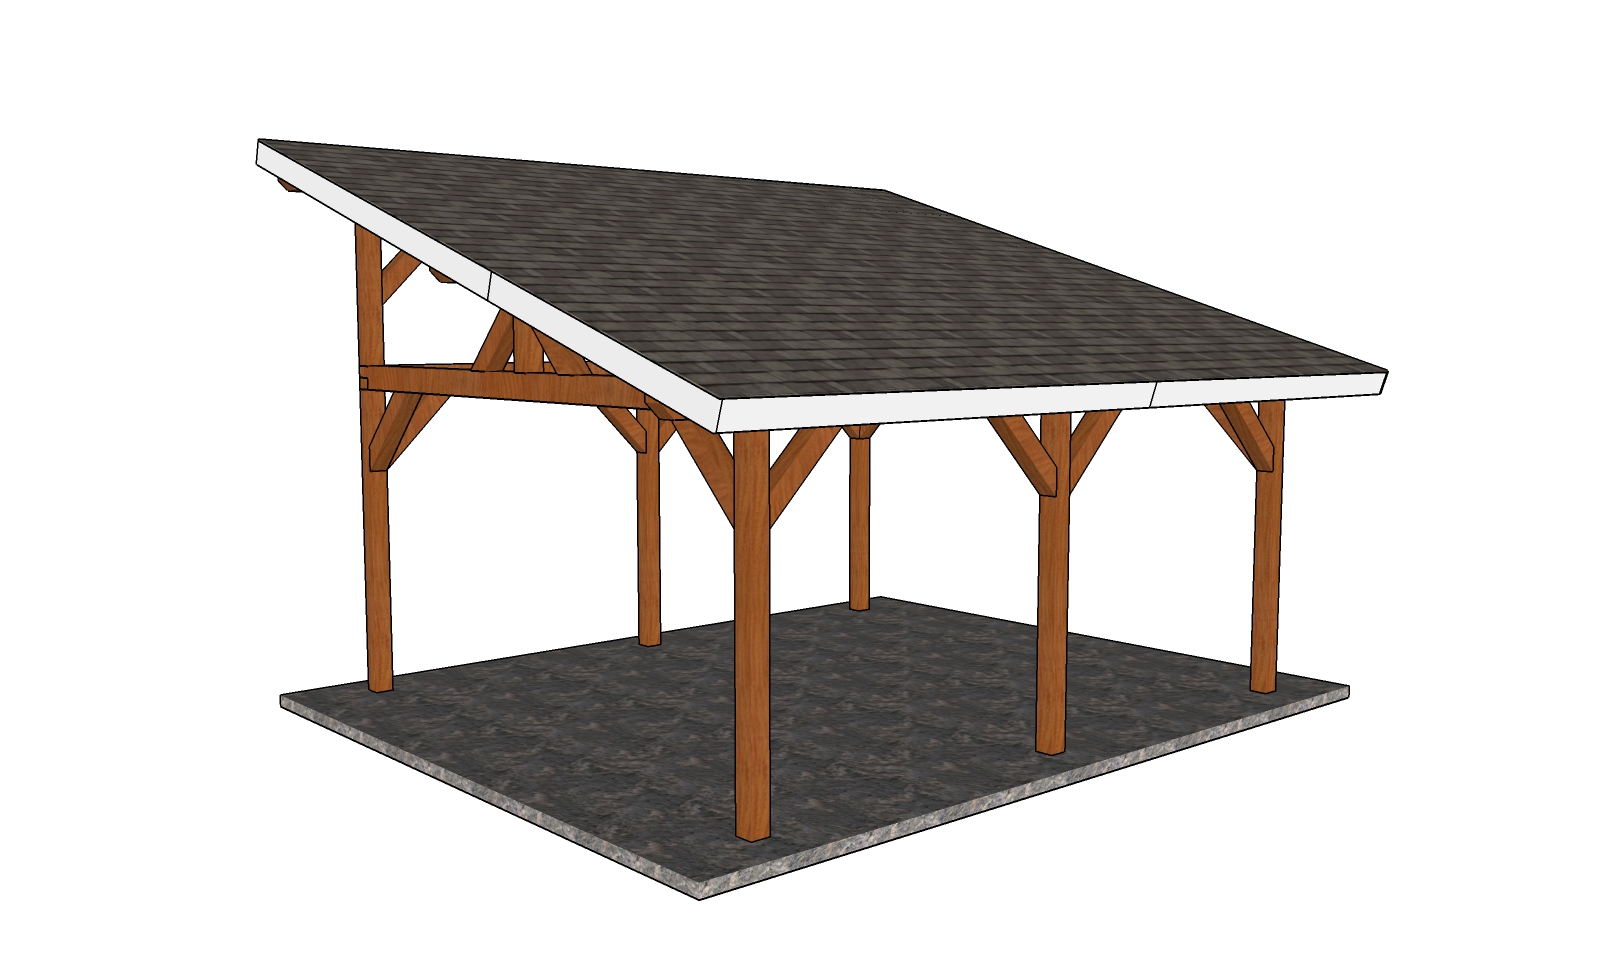 16×18 Lean to Pavilion Plans Free | MyOutdoorPlans | Free Woodworking